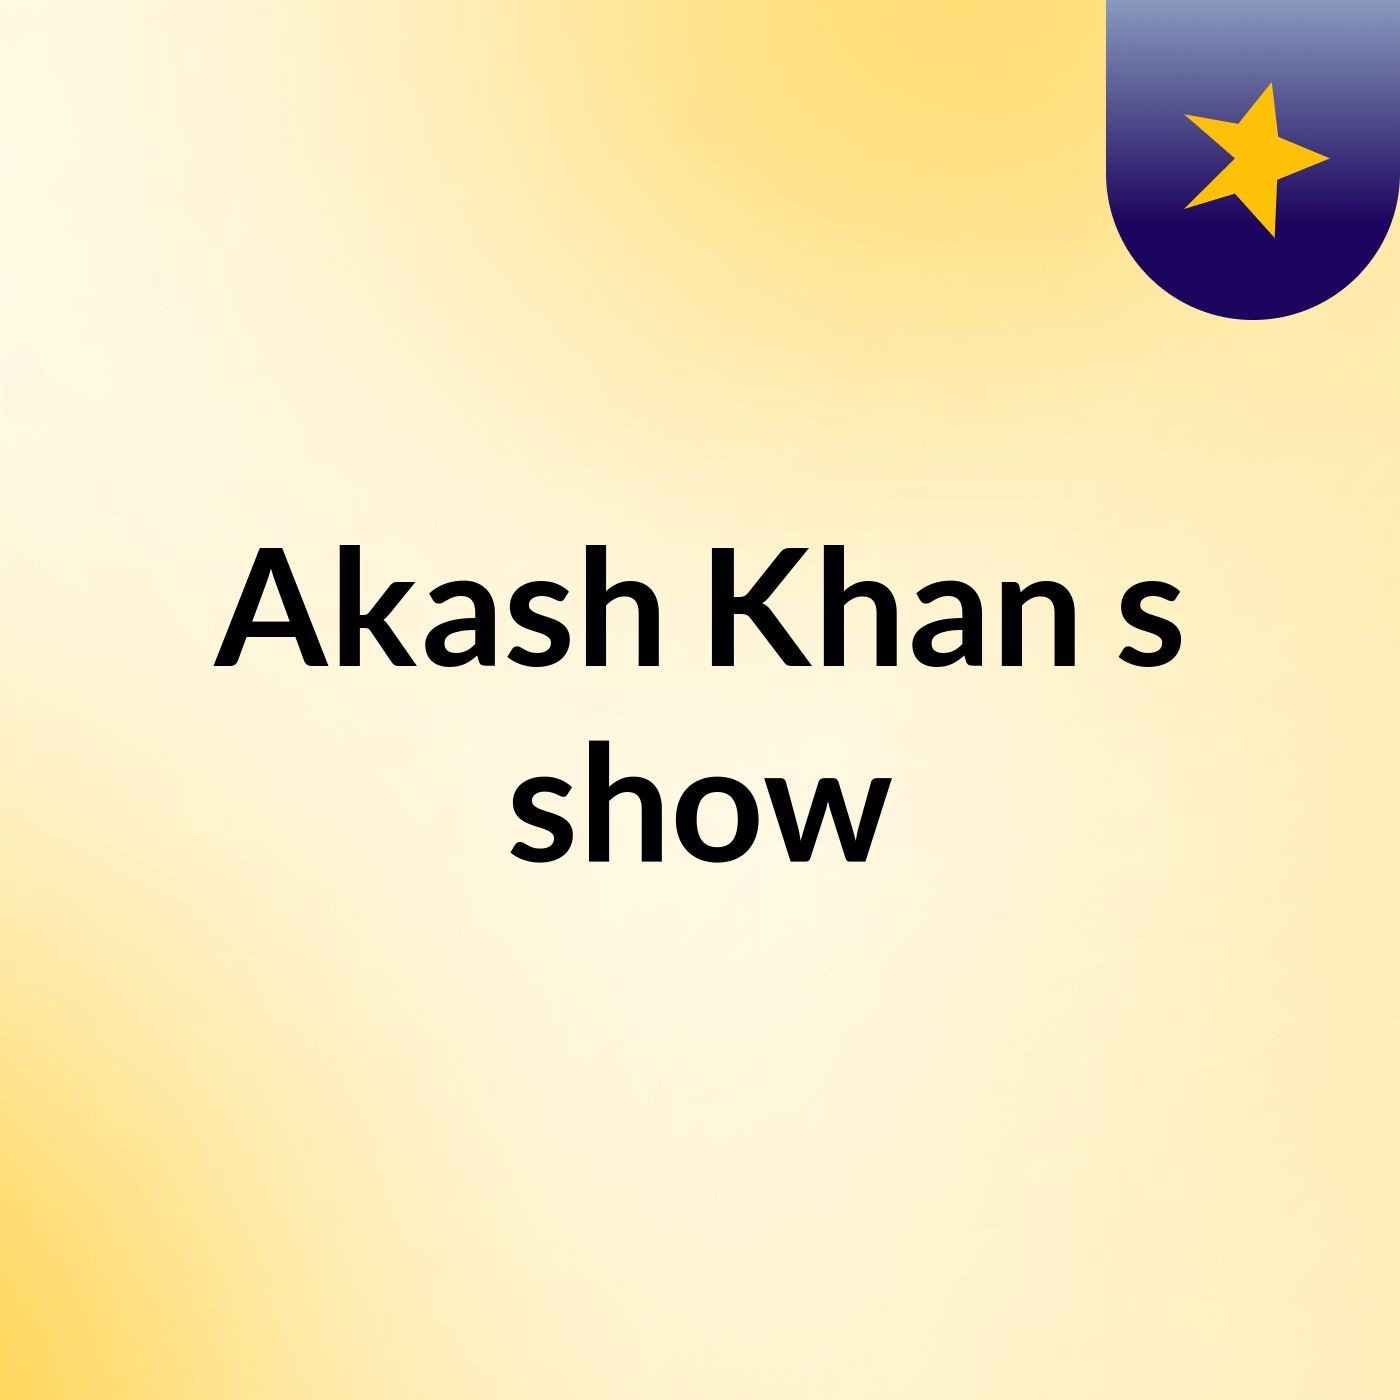 Akash Khan's show